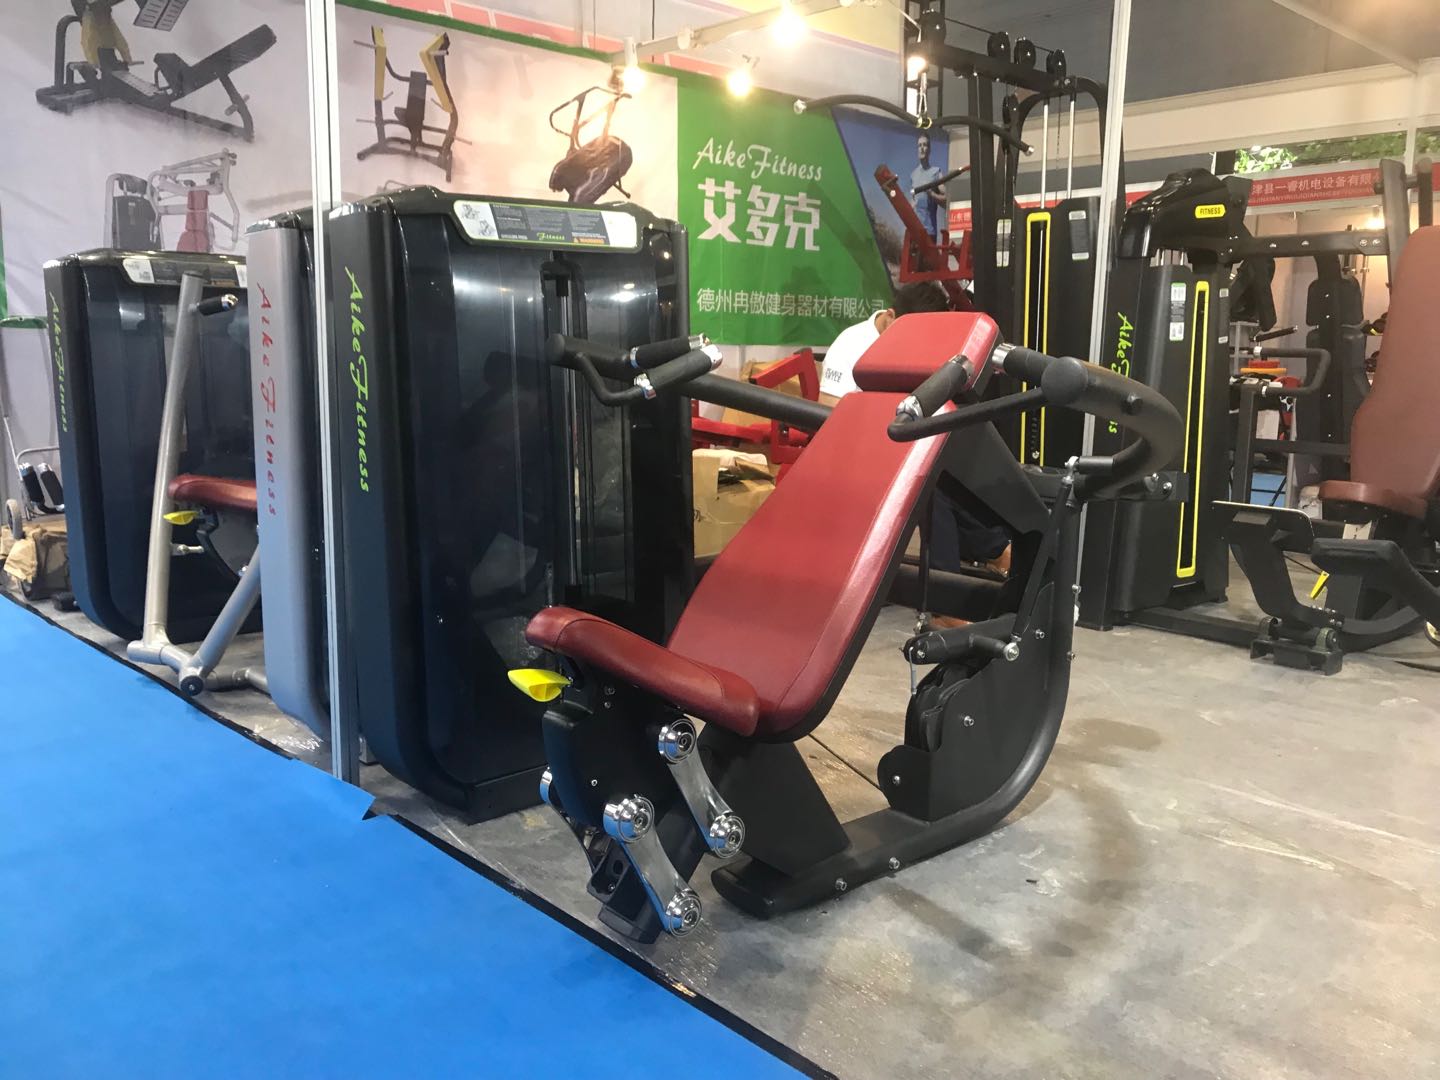 china fitness equipment sports show 2018